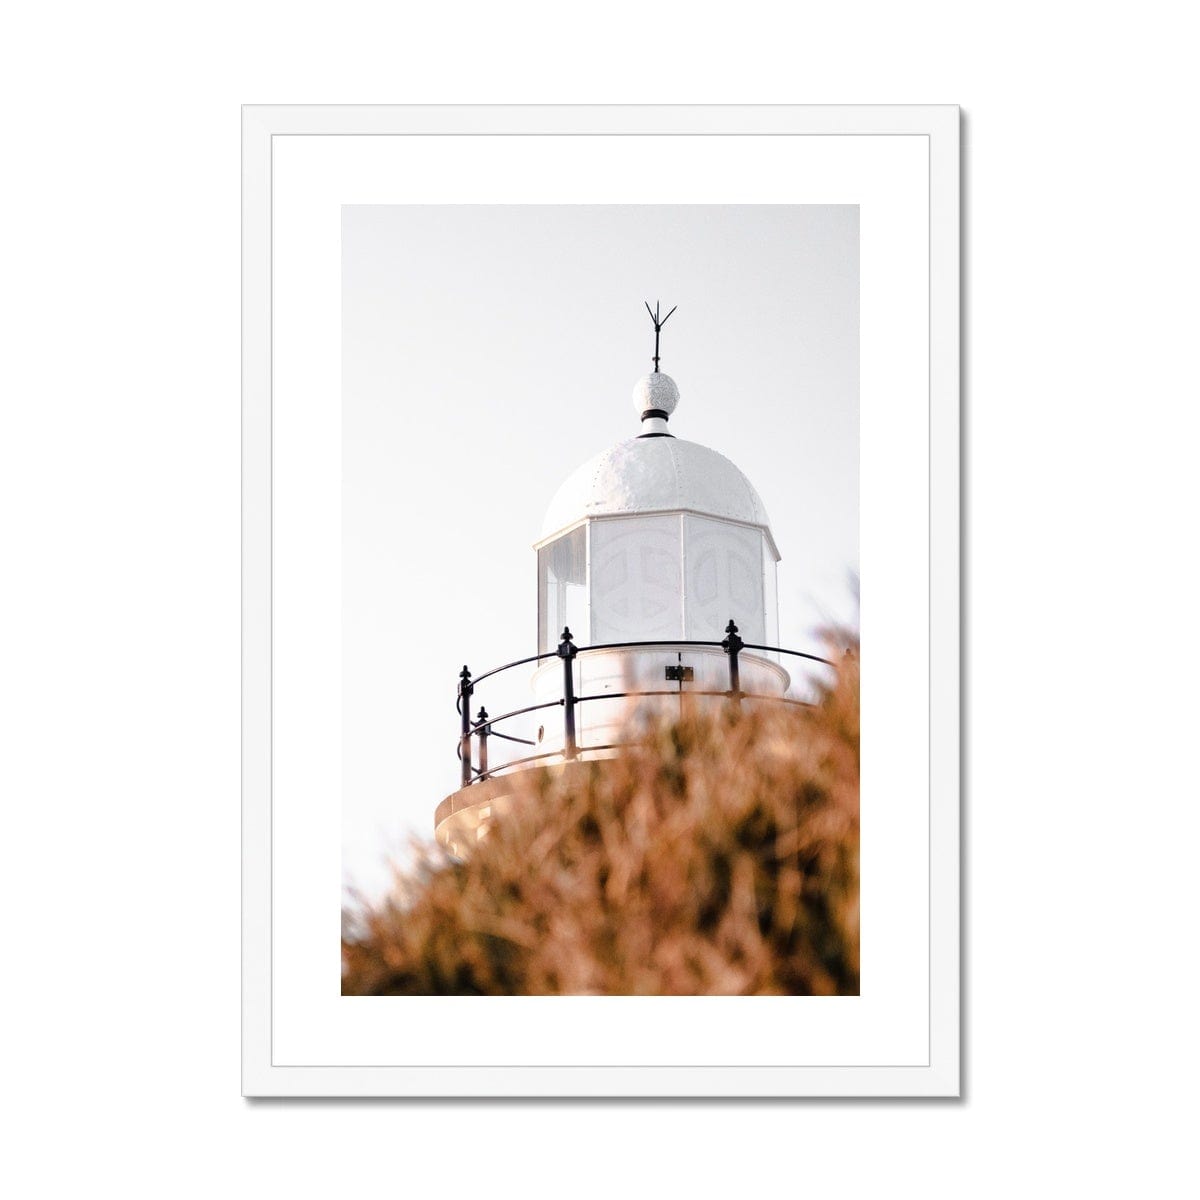 Adam Davies Framed A4 Portrait / White Frame Tacking Point Lighthouse Port Macquarie Framed Print